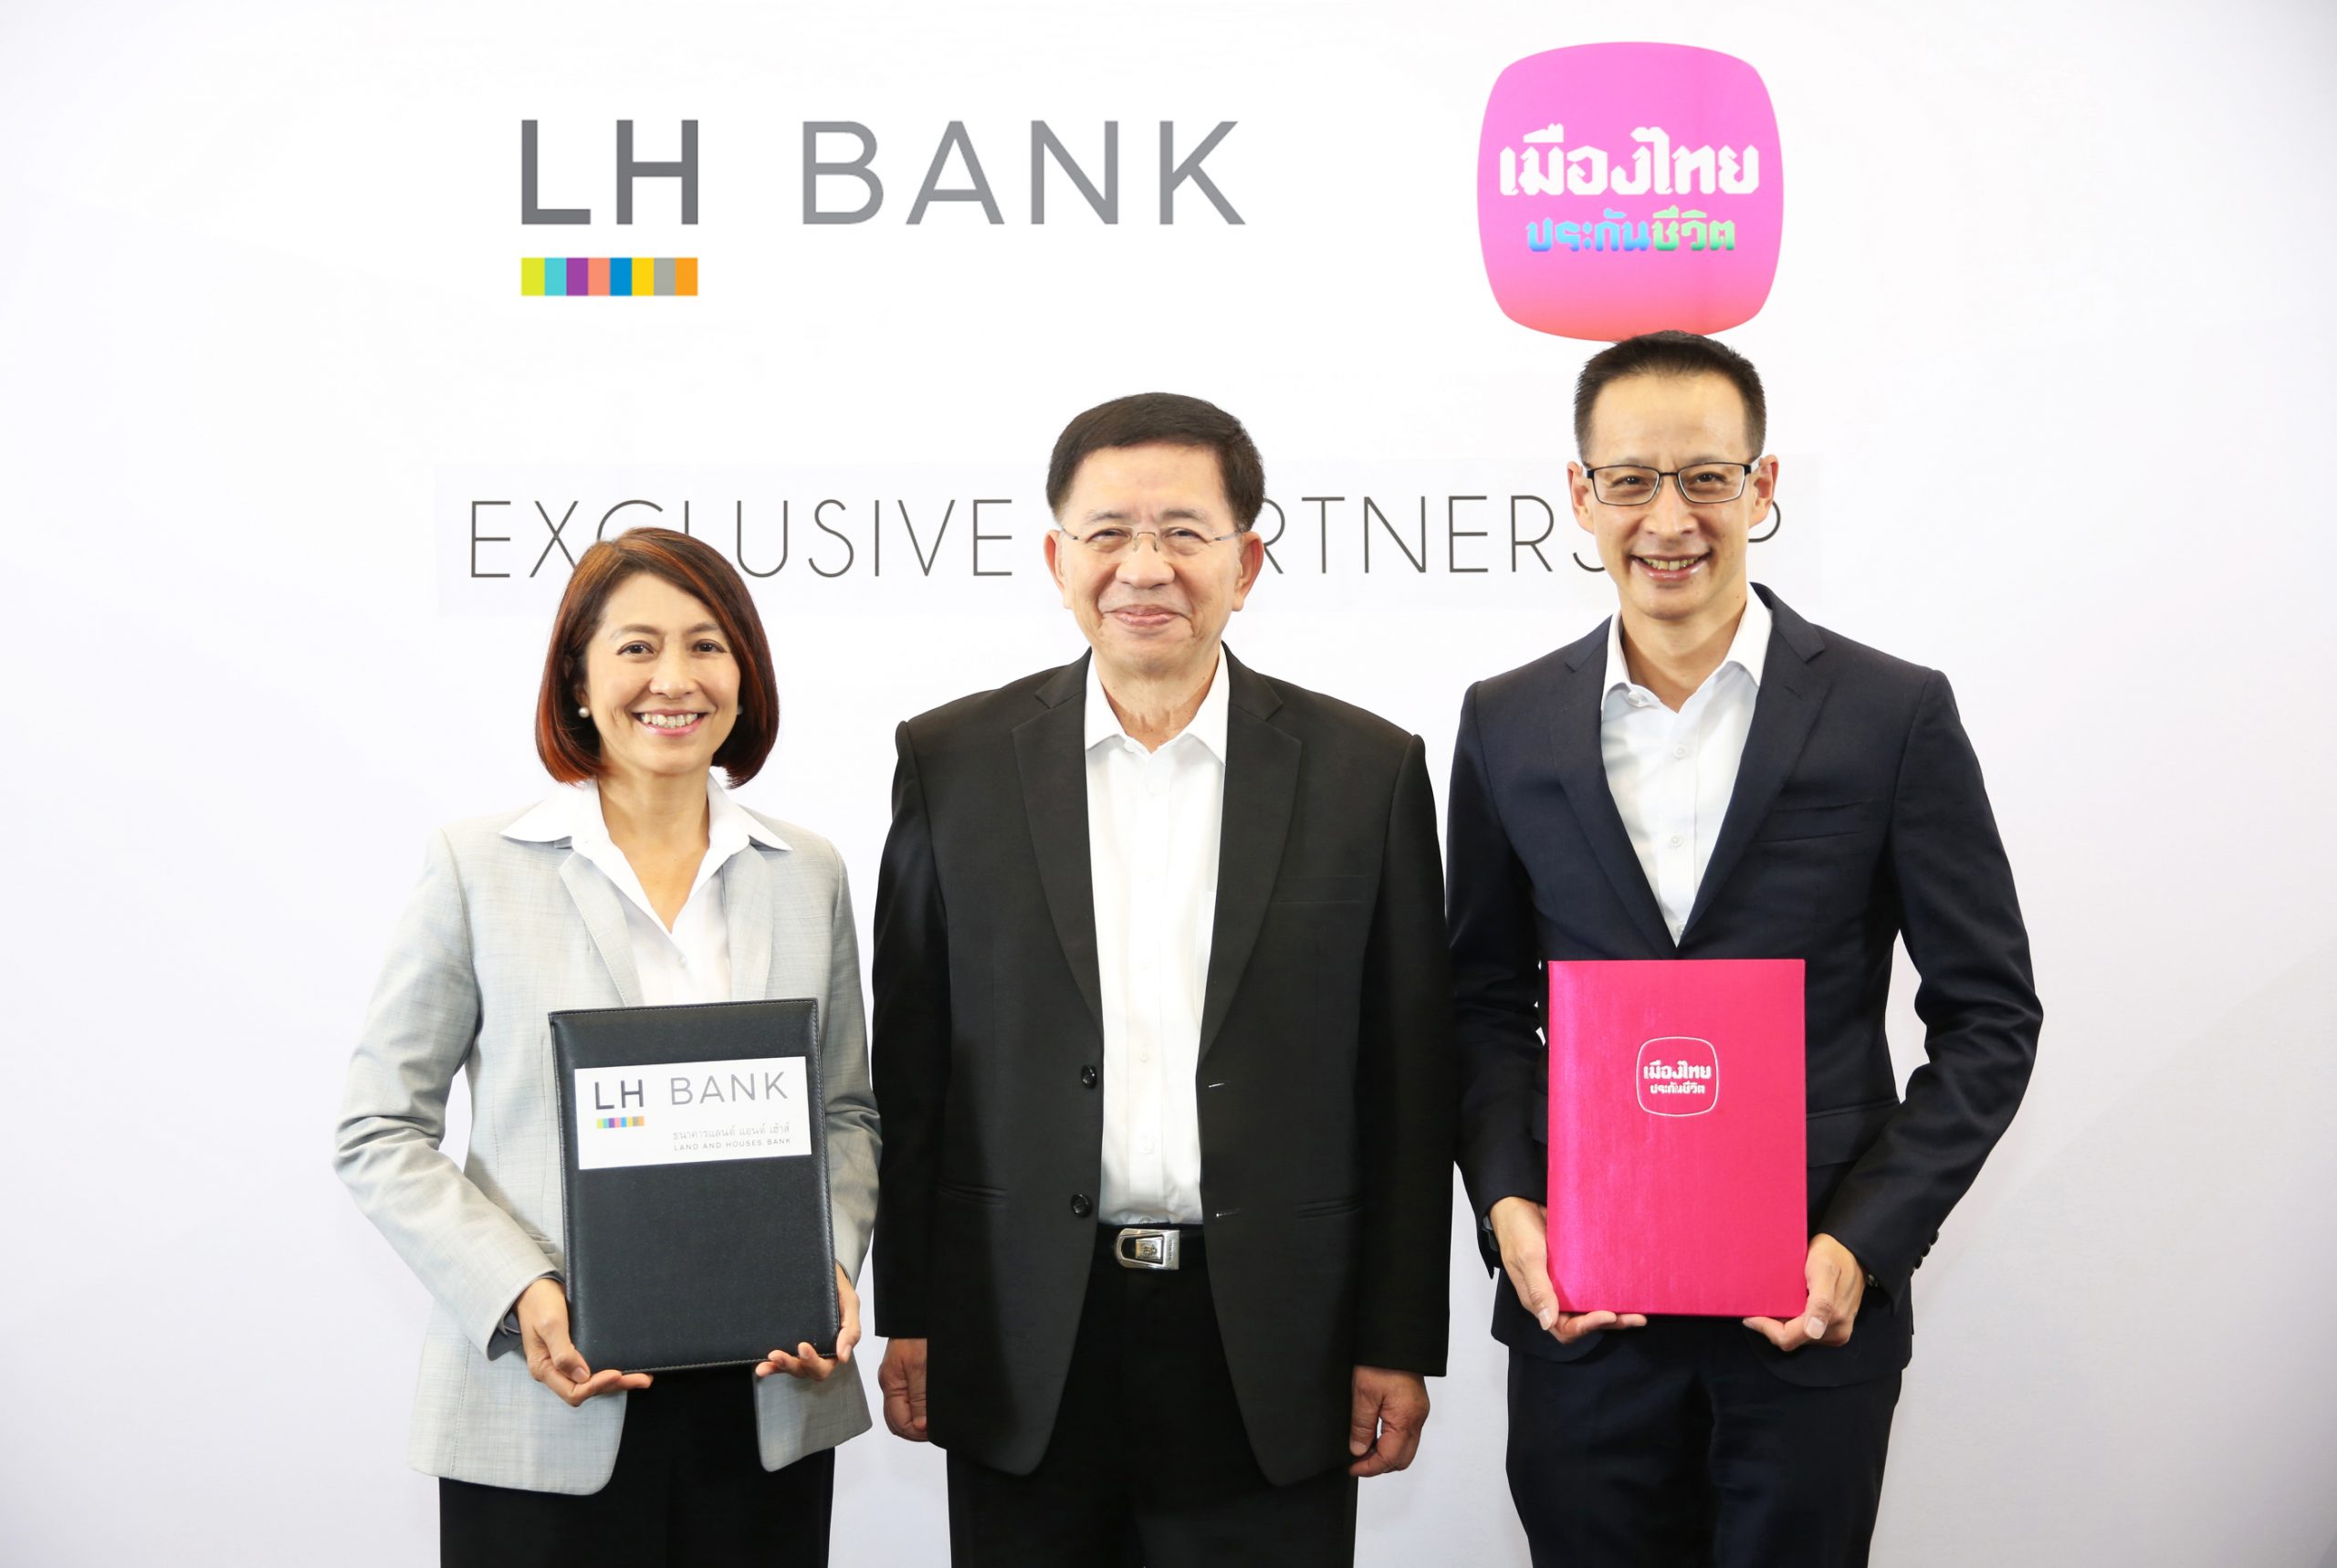 LH Bank ผนึกกำลัง เมืองไทยประกันชีวิต เป็น Exclusive Partnership รุกตลาดประกันชีวิต ผสานจุดแข็ง ตอบโจทย์ทุกความต้องการ